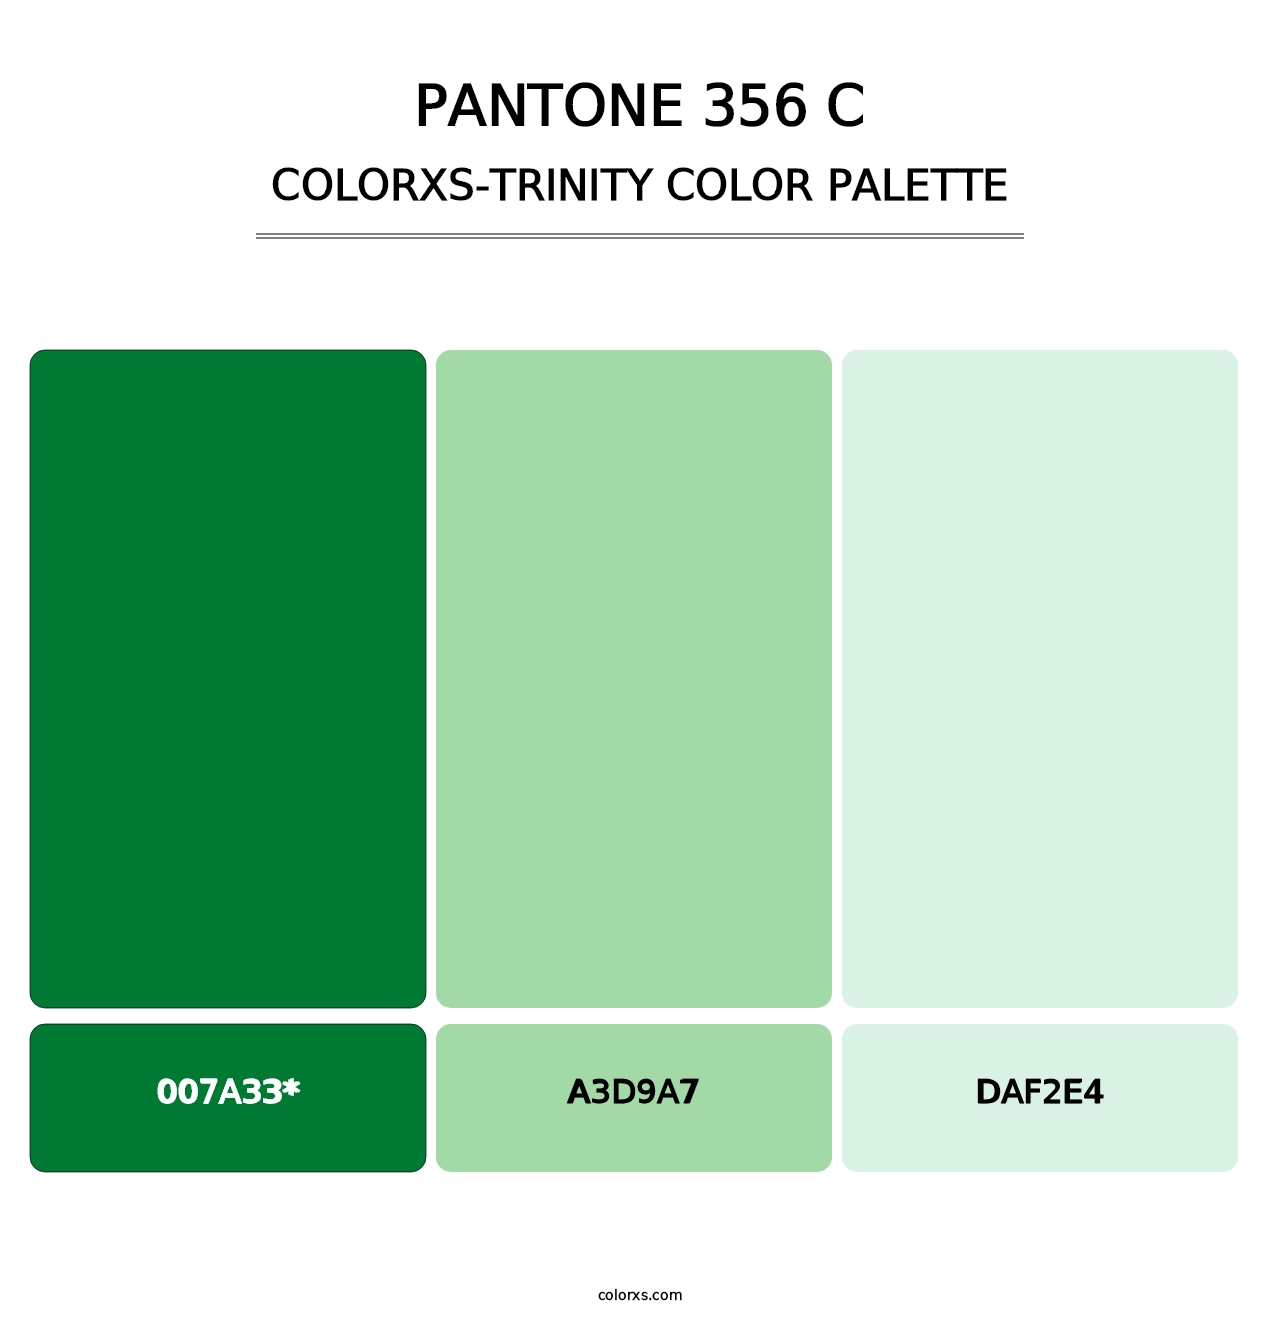 PANTONE 356 C - Colorxs Trinity Palette